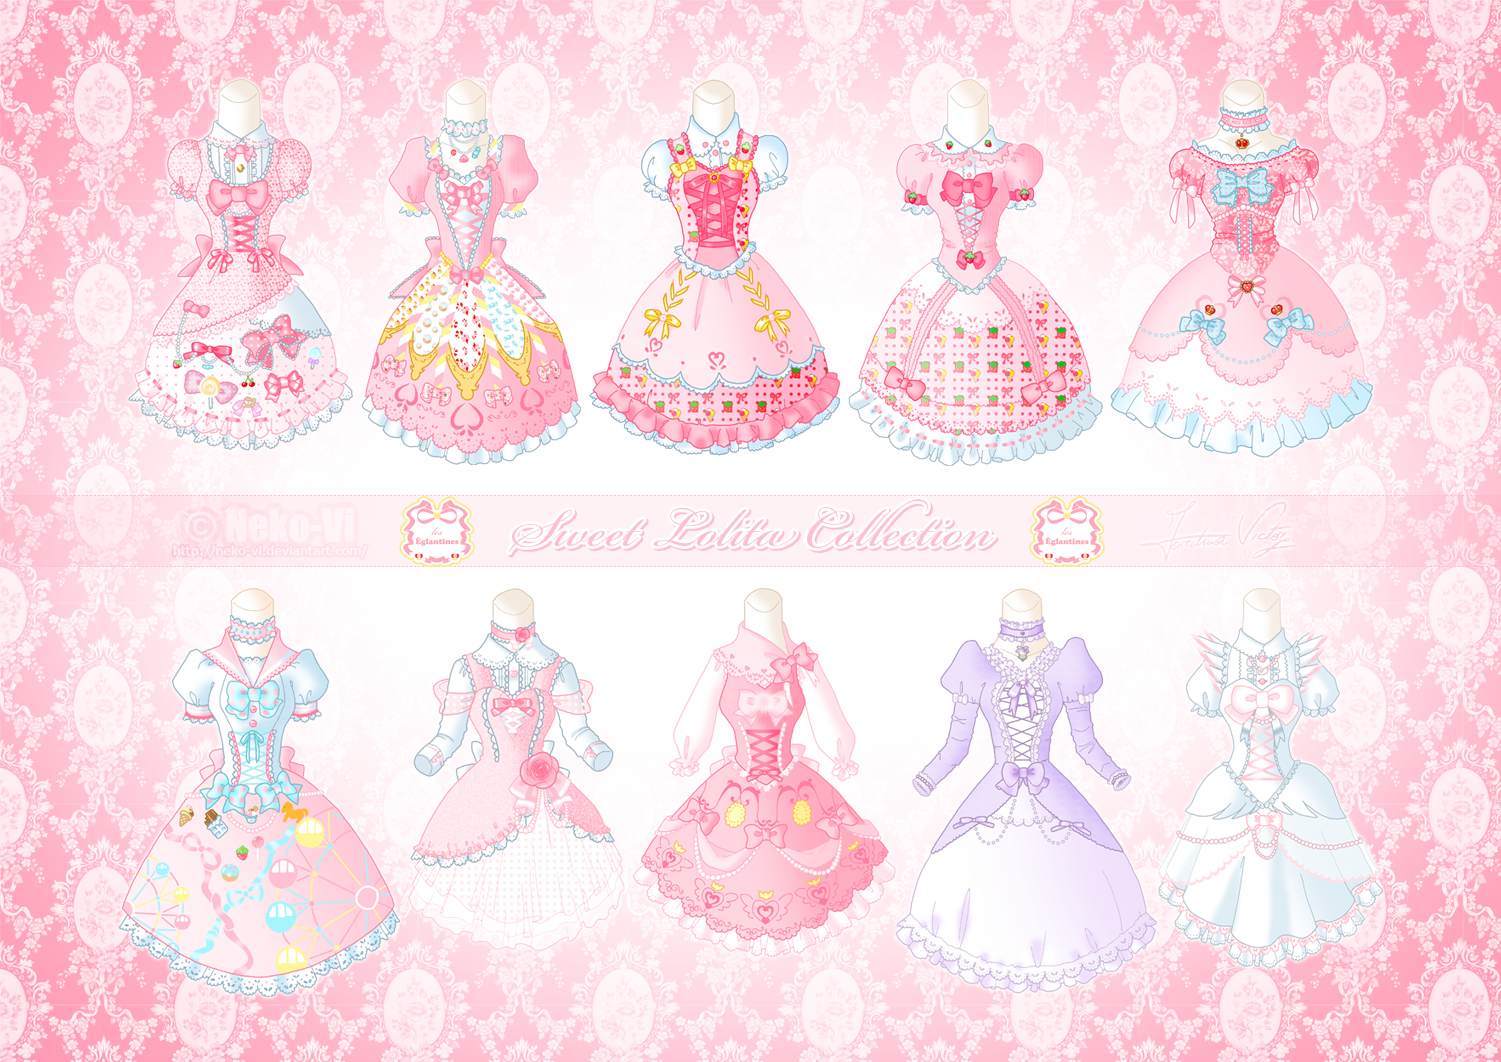 Guide to All Lolita Styles by Neko-Vi on DeviantArt